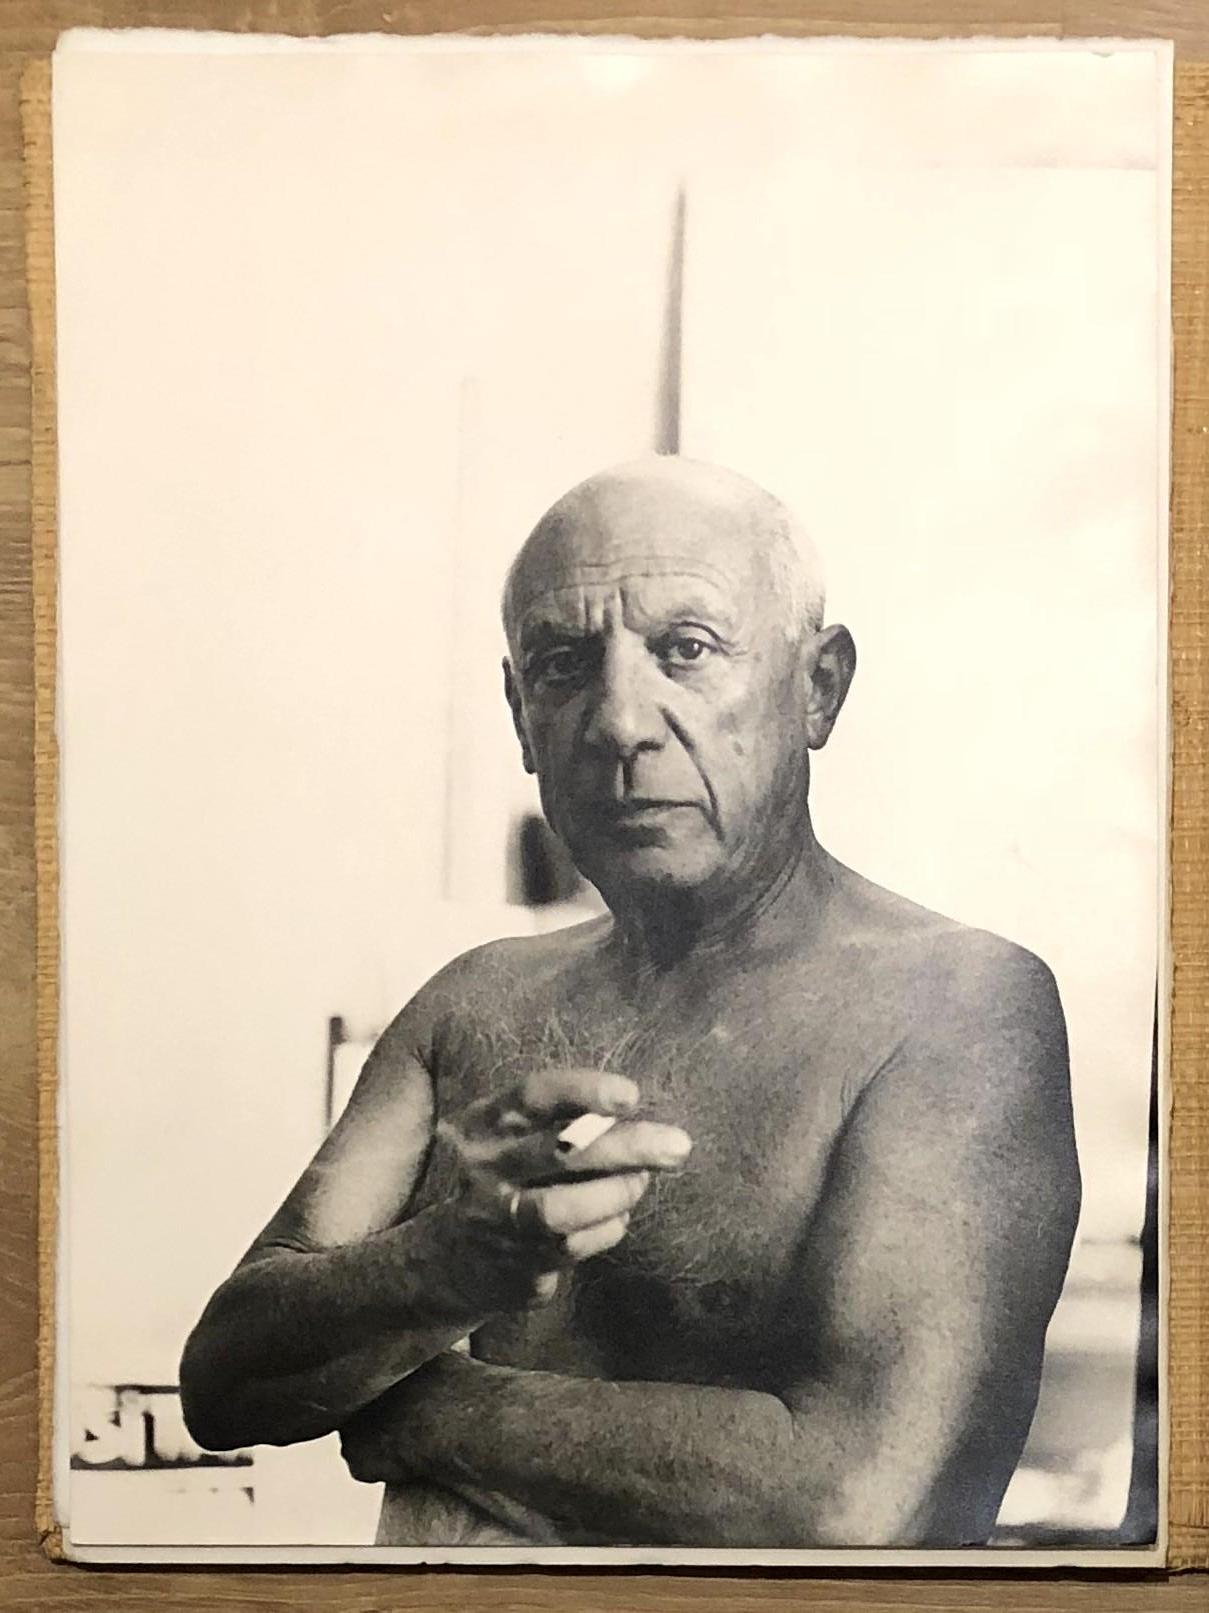 Picasso Portrait by André Villers - 79 copies - Photograph by Pablo Picasso